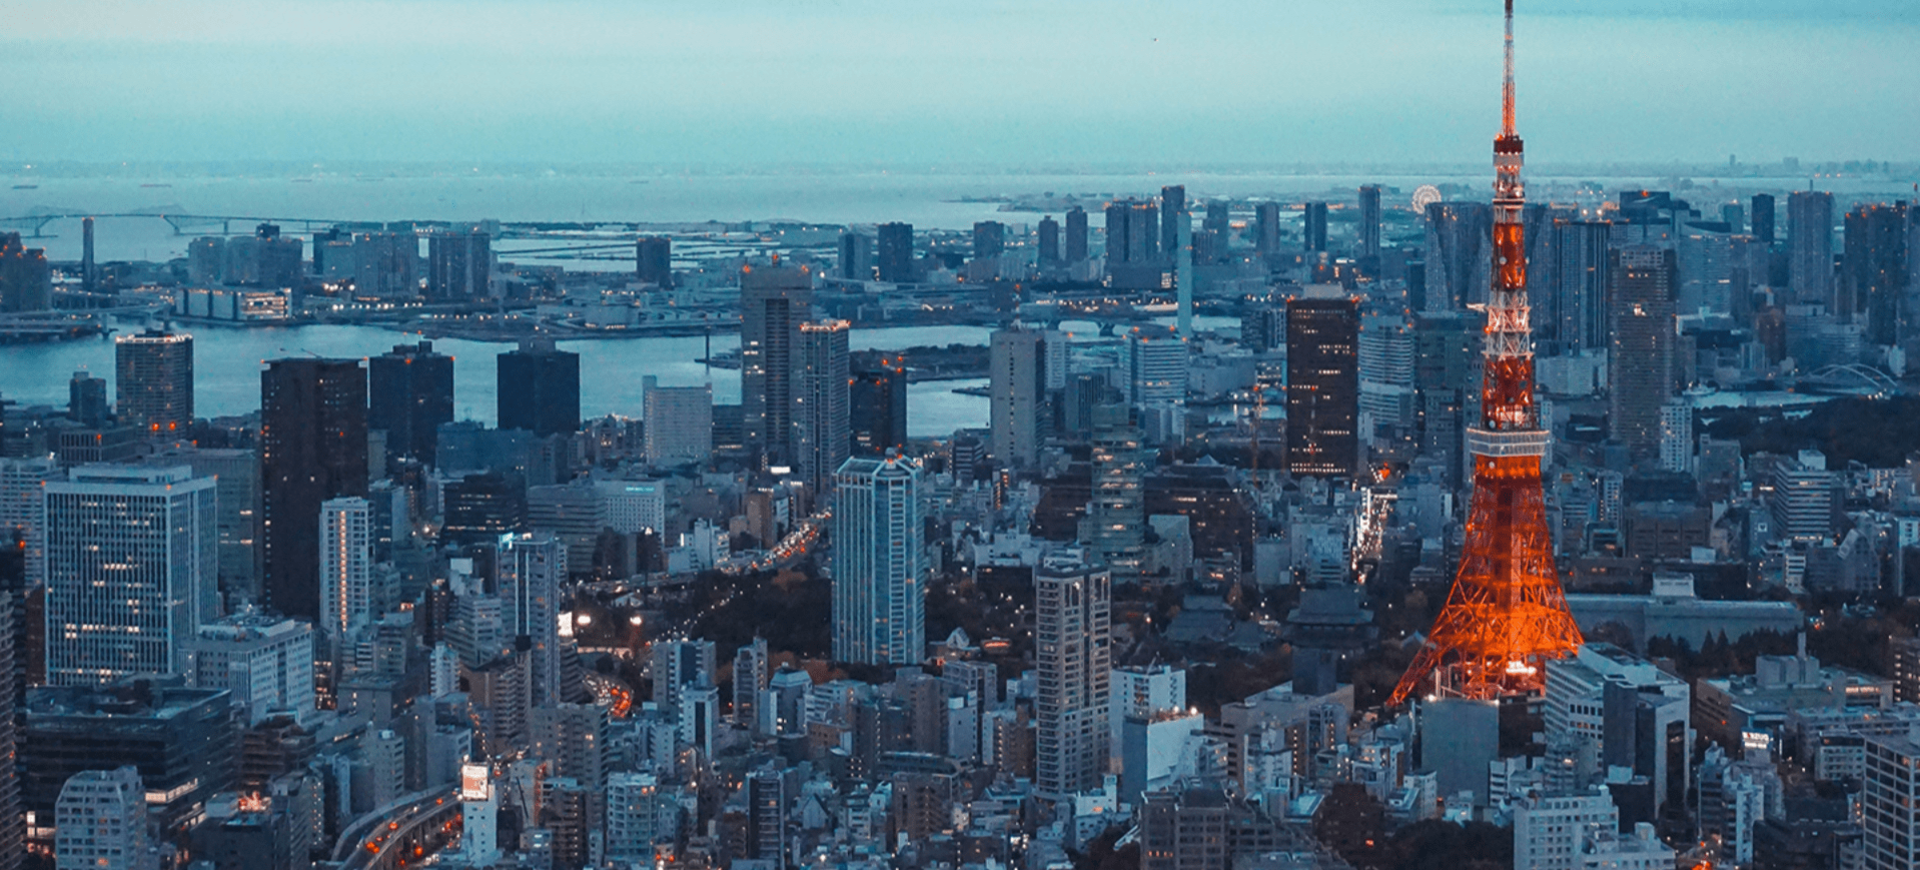 Skyline of Tokyo